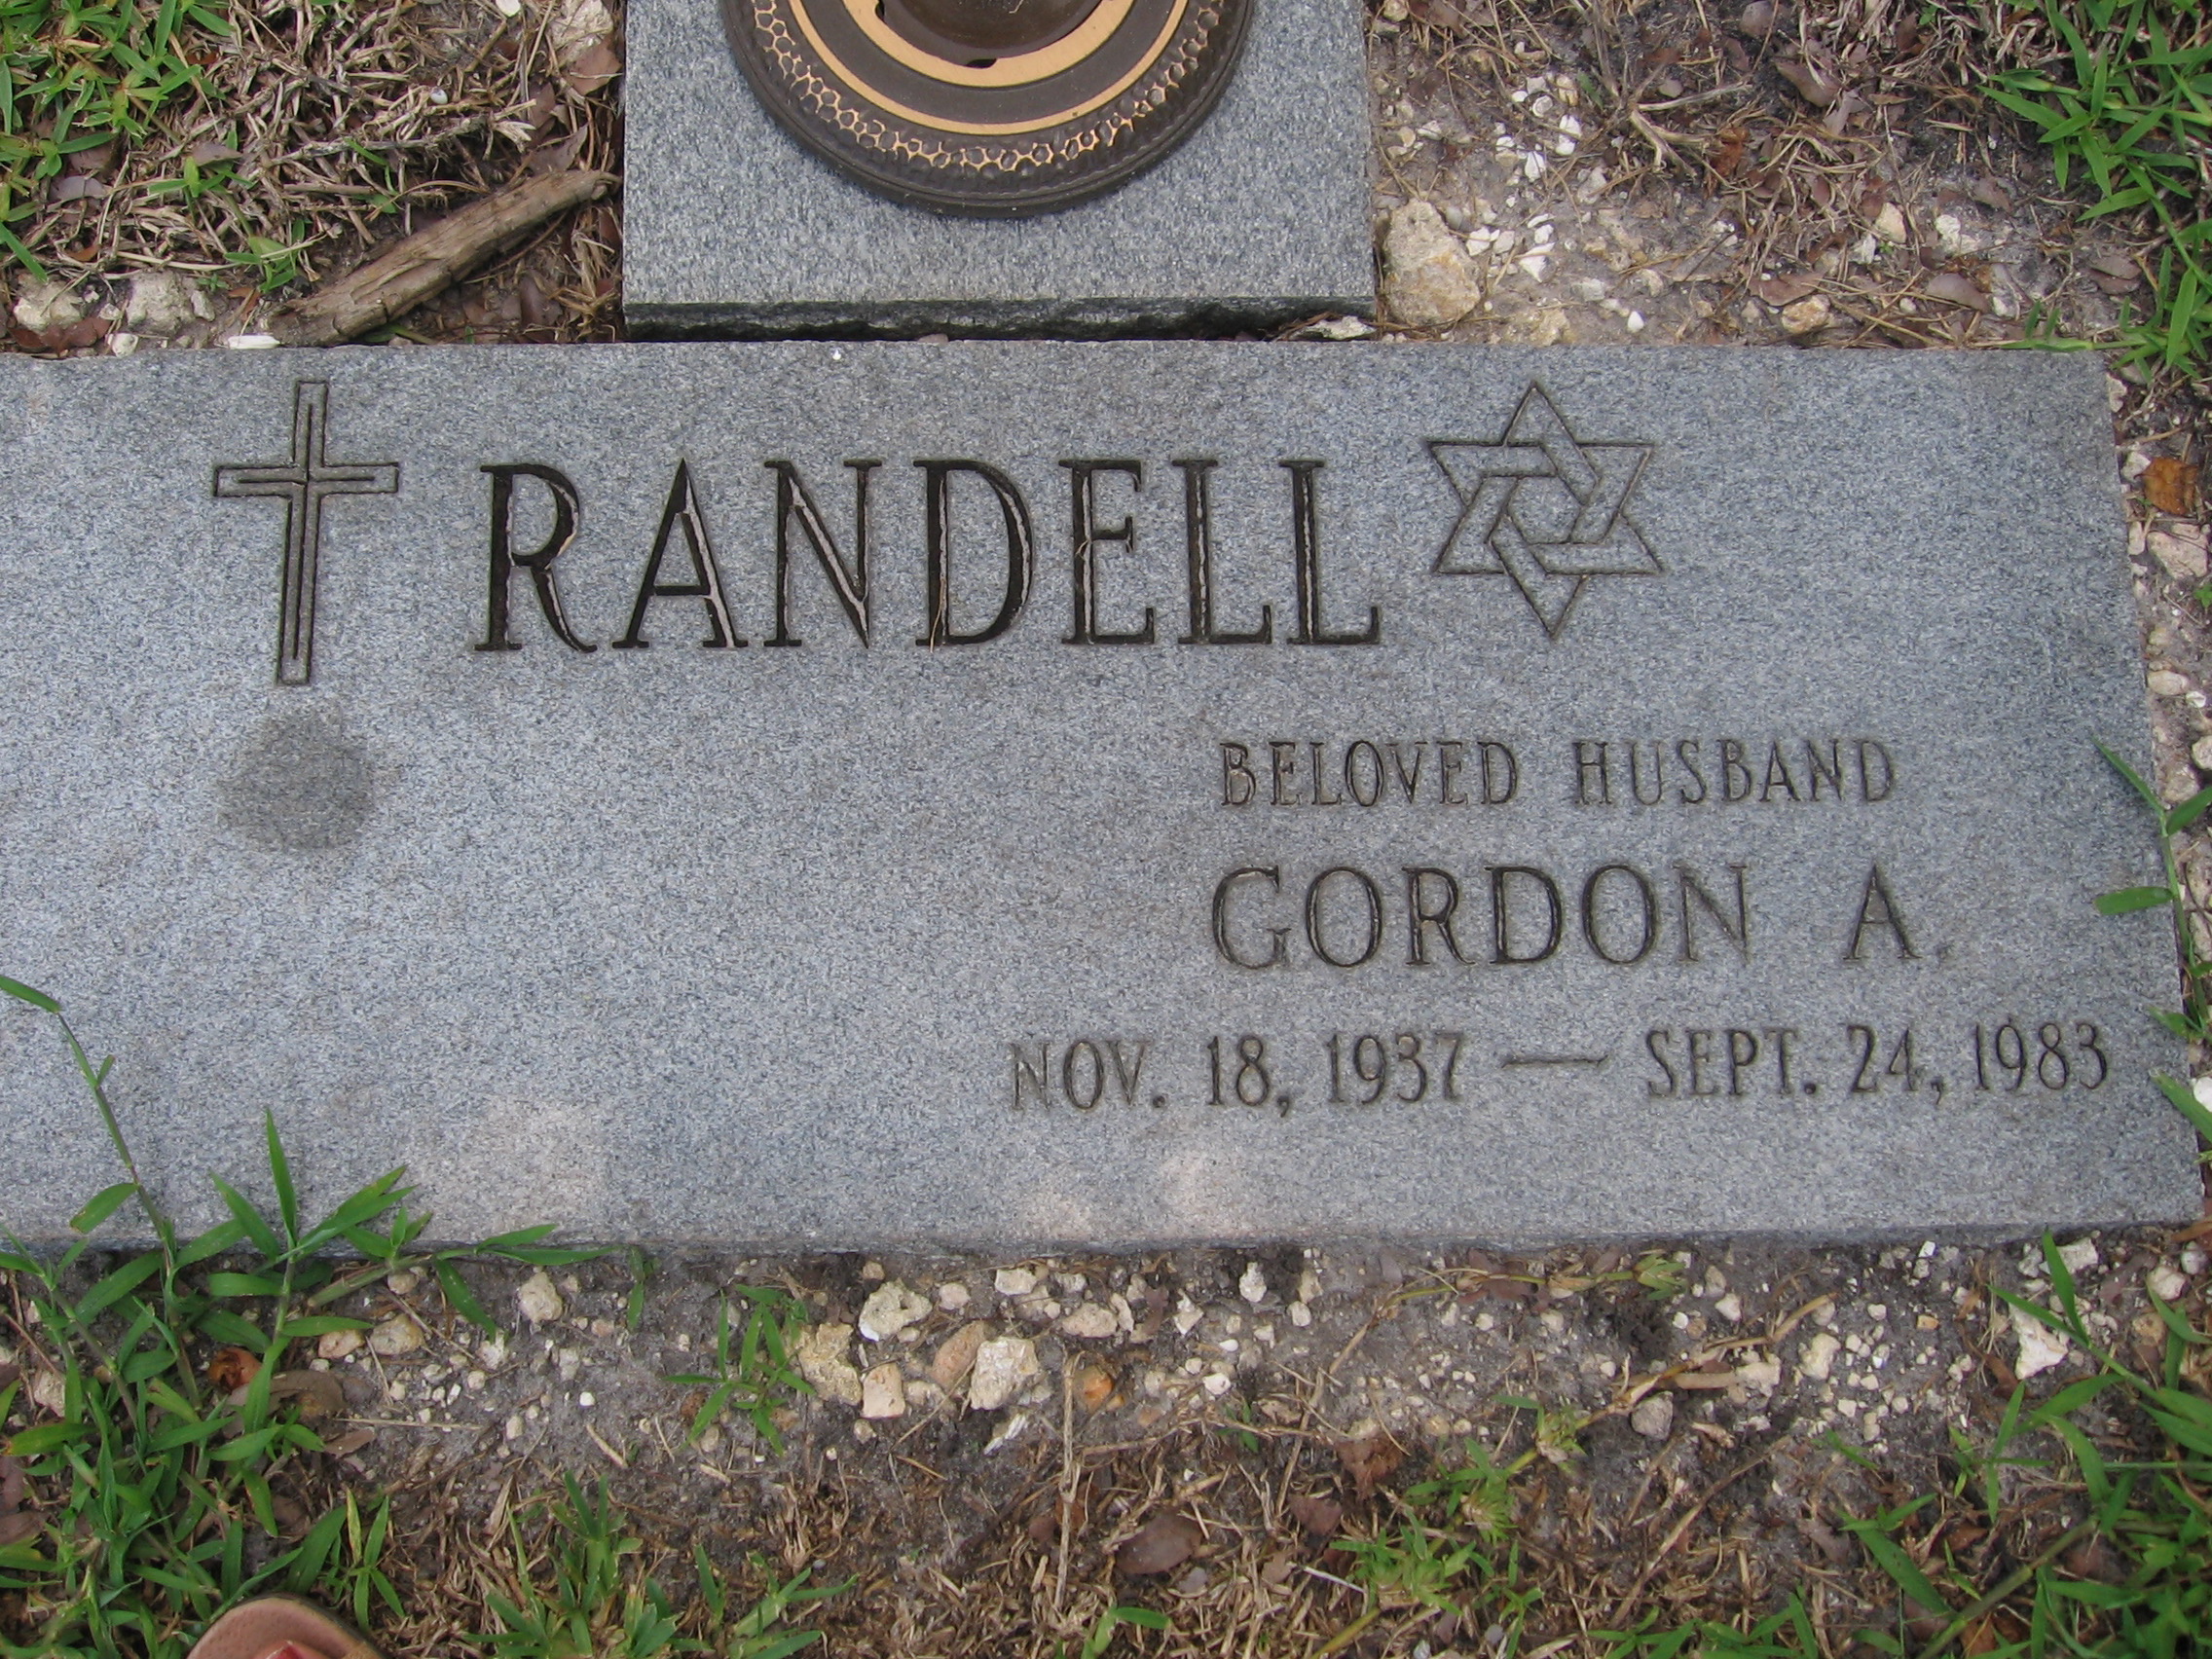 Gordon A Randell